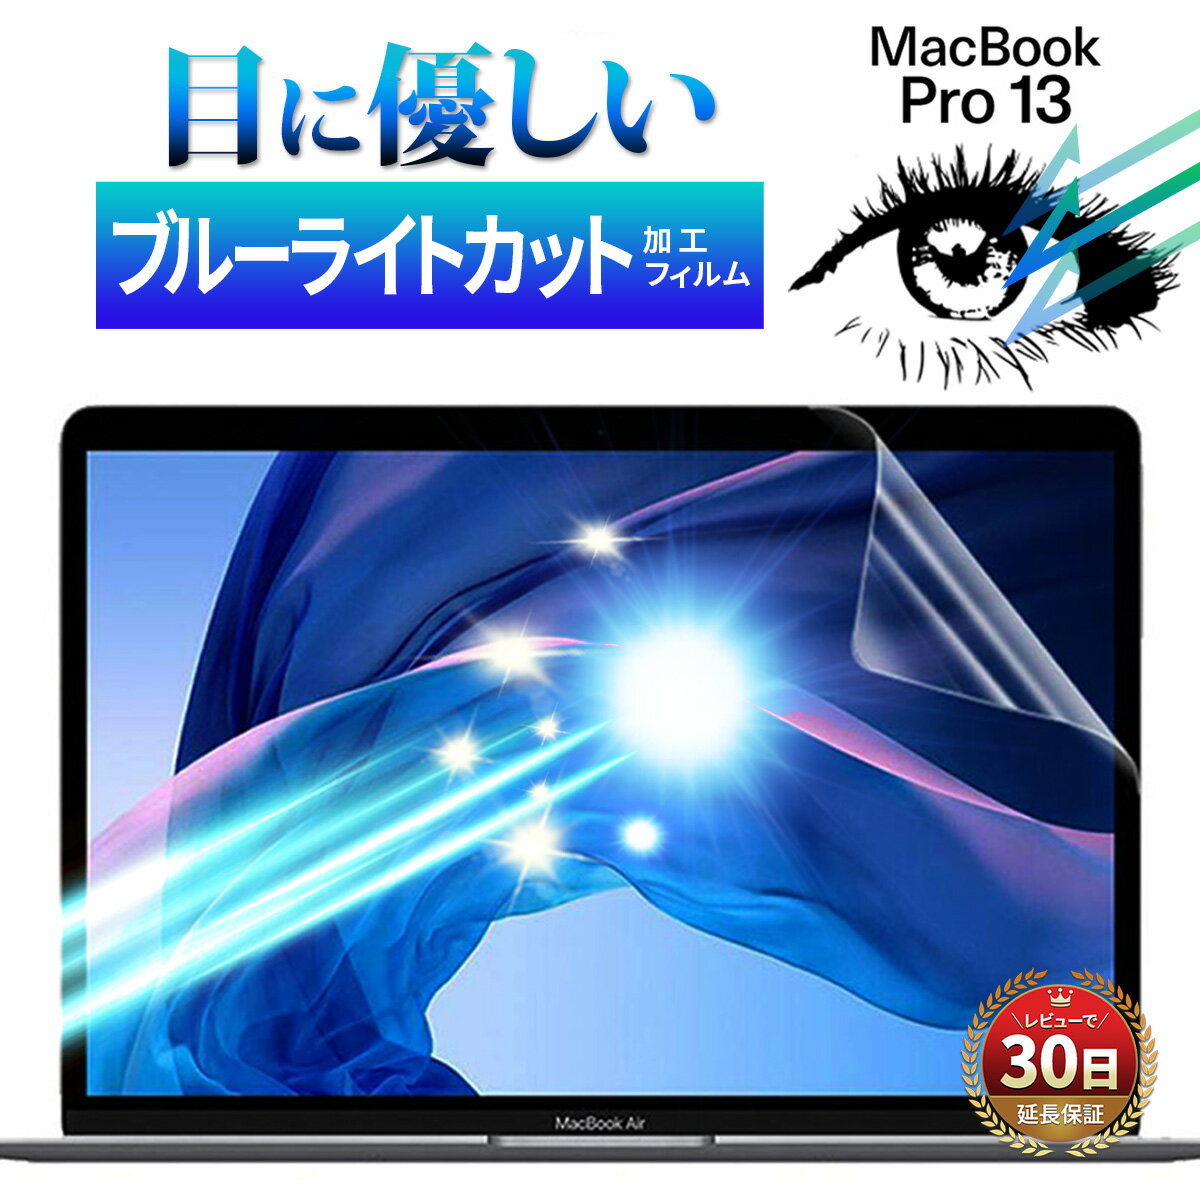 Apple MacBook Pro 13 マックブック プロ 